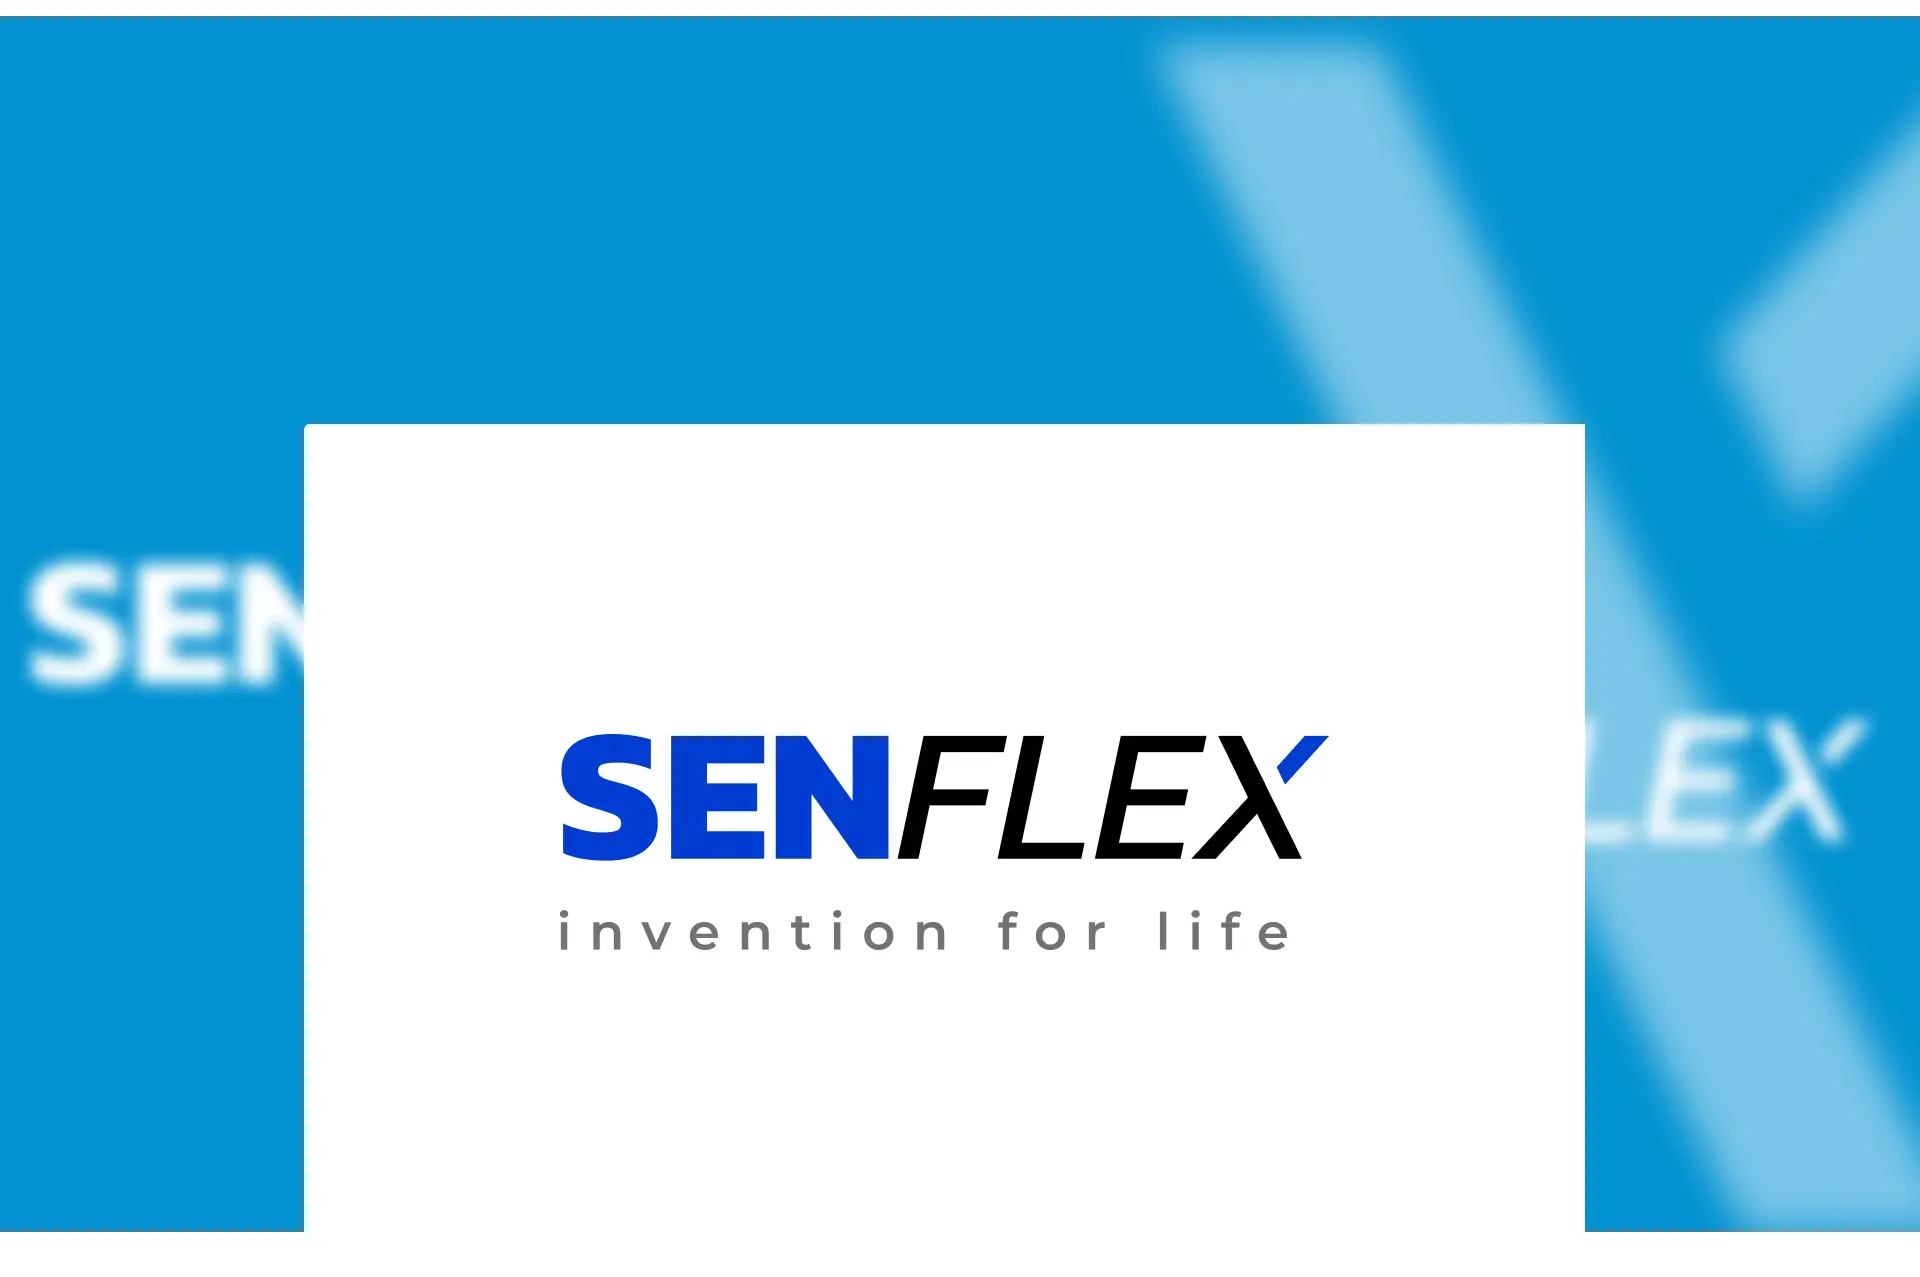 The final design of SENFLEX logo